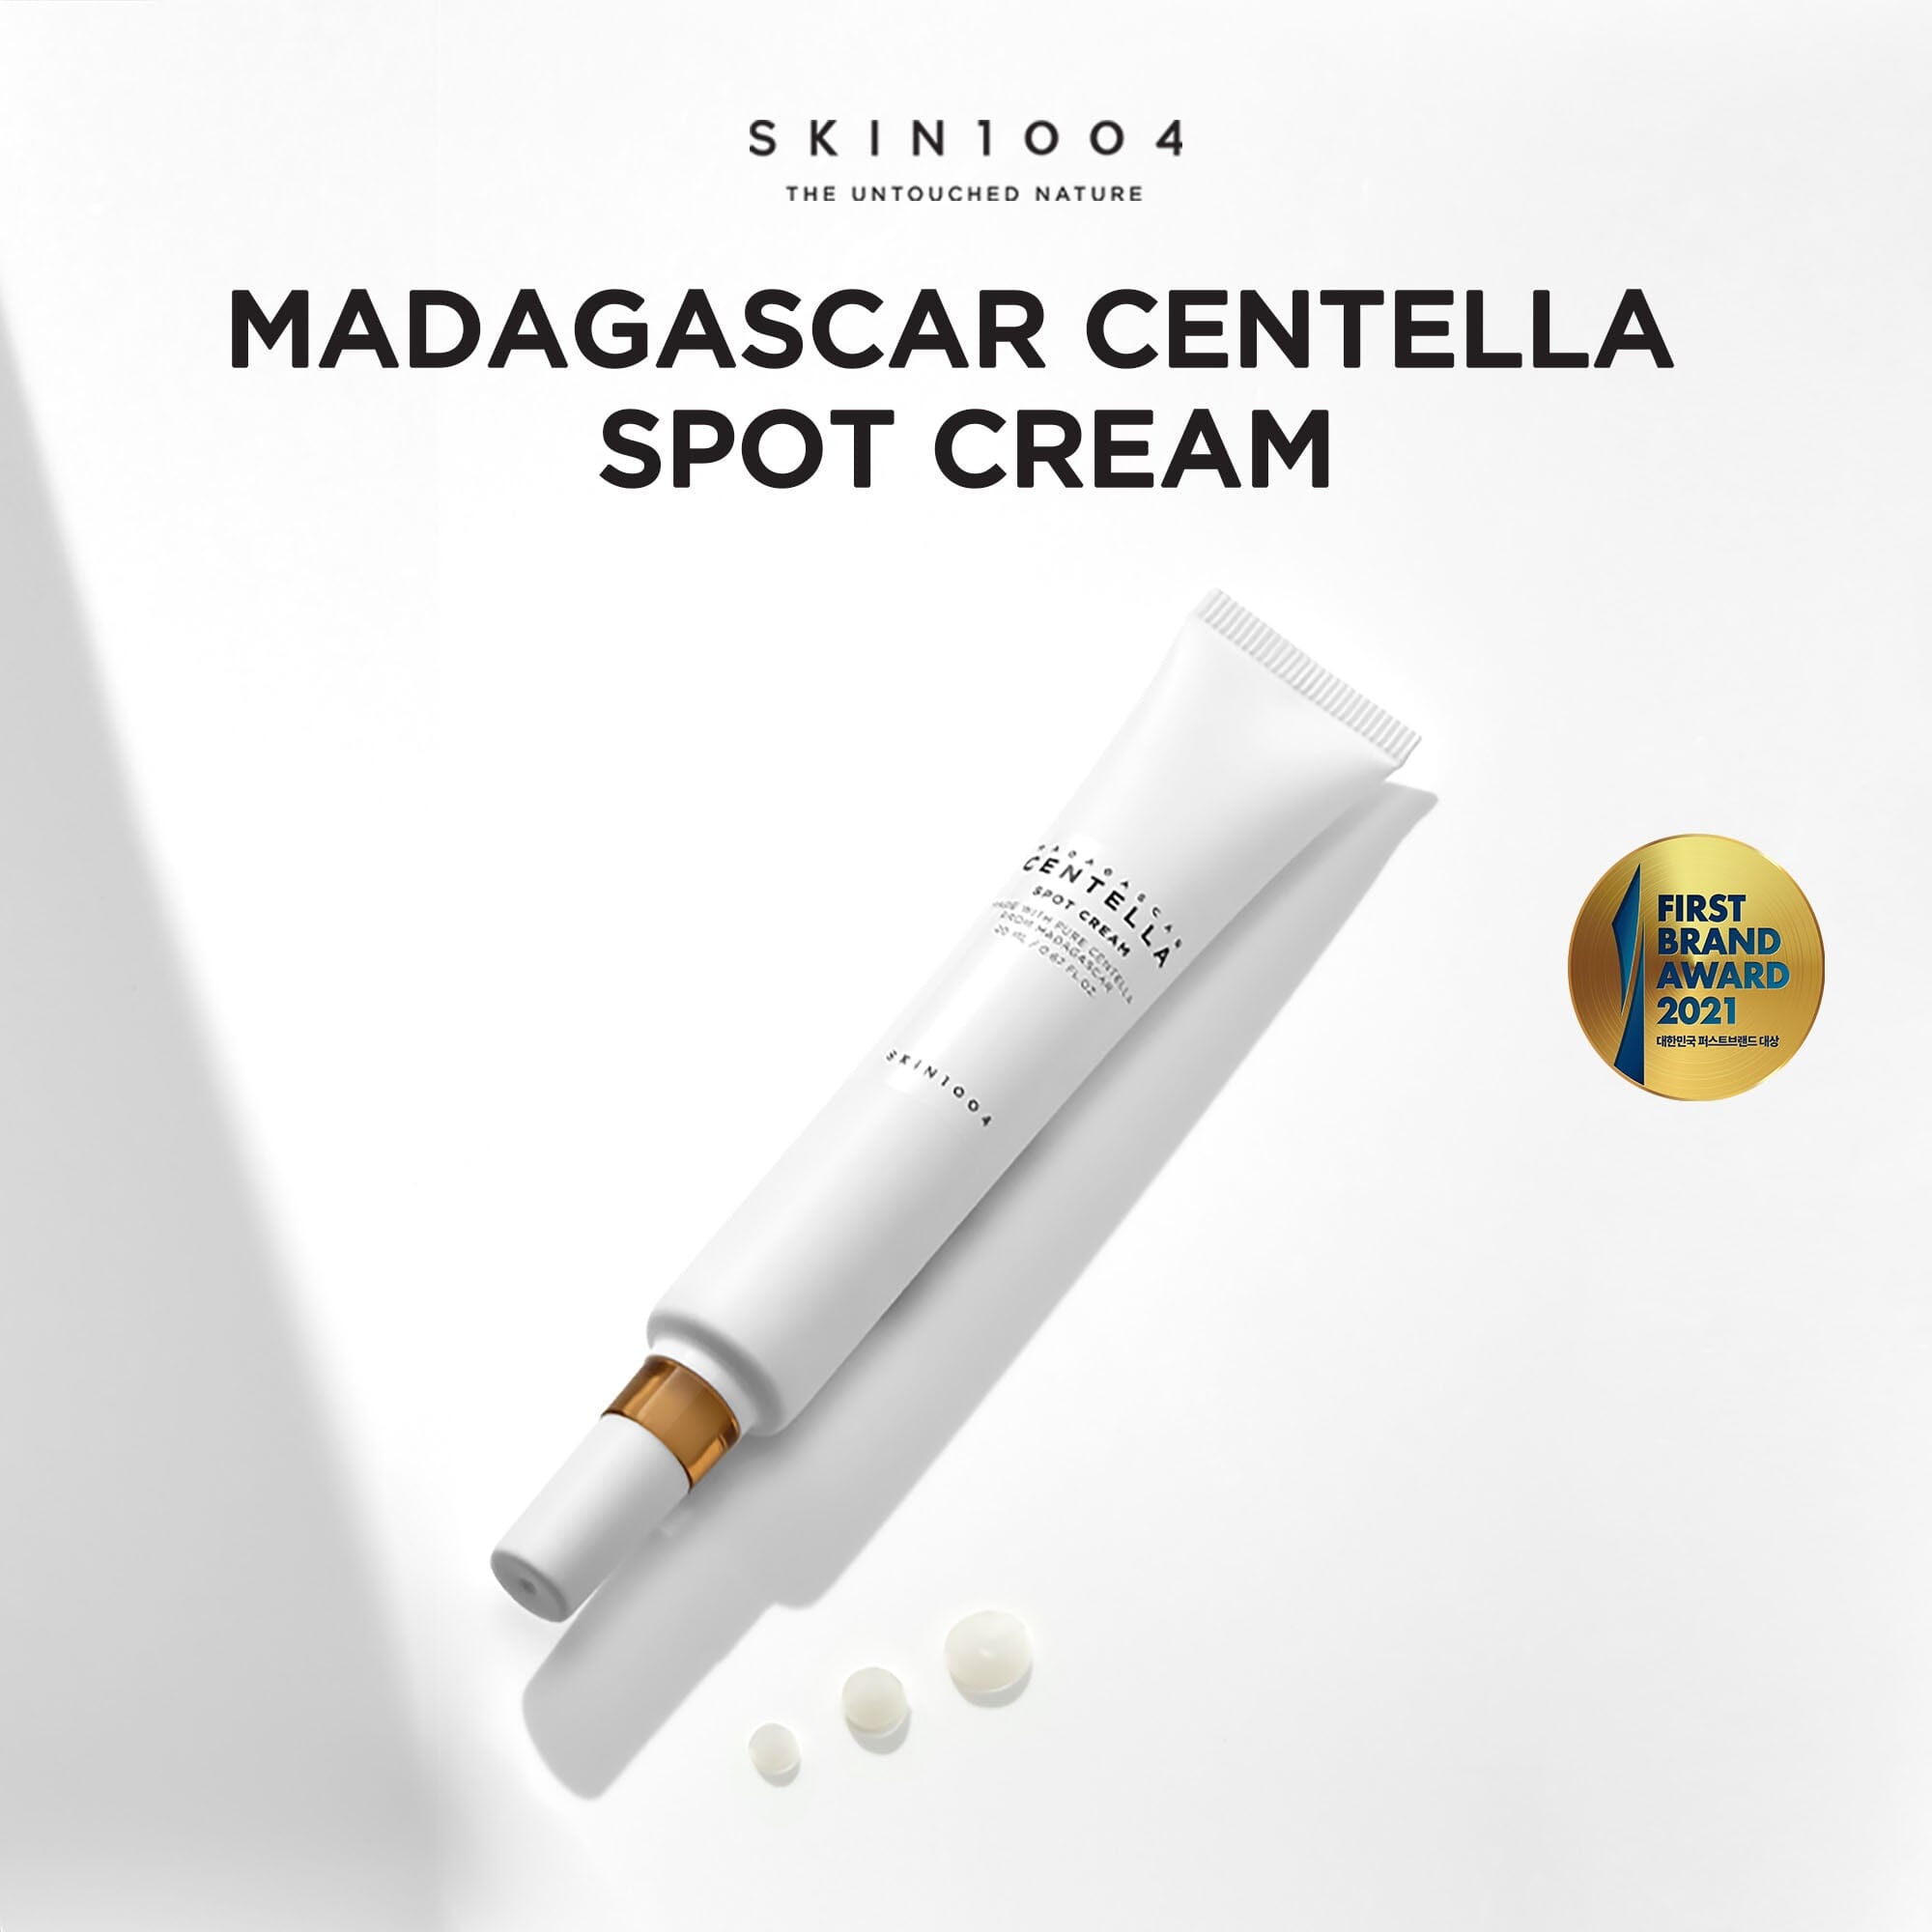 SKIN1004 Madagascar Centella Spot Cream 20ml, at Orion Beauty. SKIN1004 Official Sole Authorized Retailer in Sri Lanka!